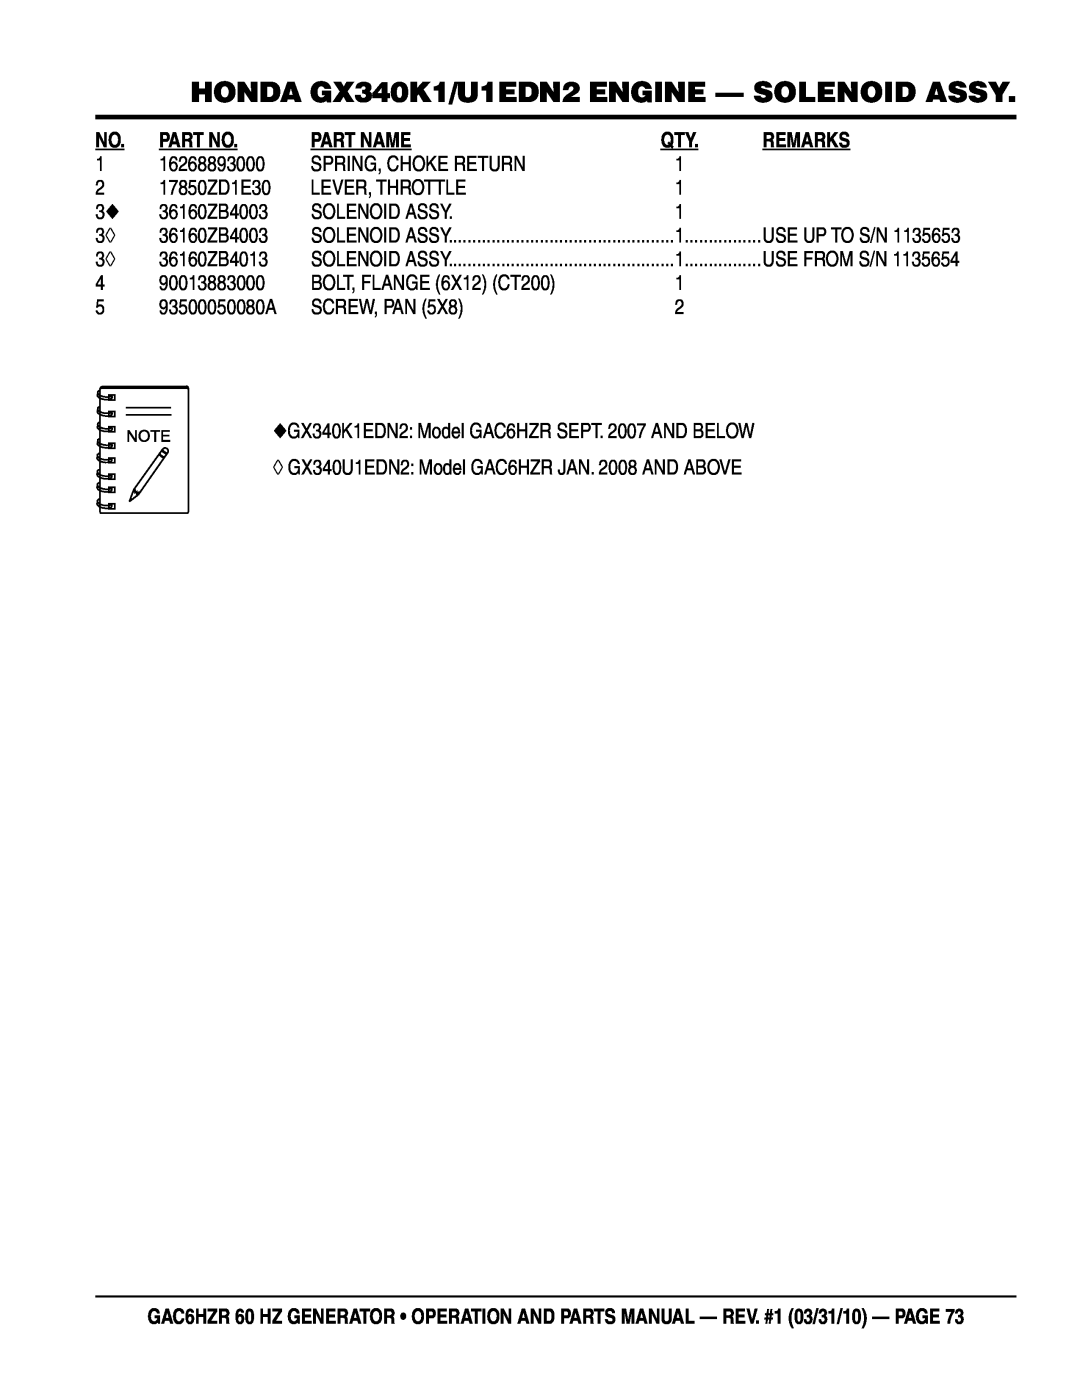 Multiquip GAC-6HZR manual HONDA GX340K1/U1EDN2 ENGINE - SOLENOID ASSY, Part Name, Remarks 